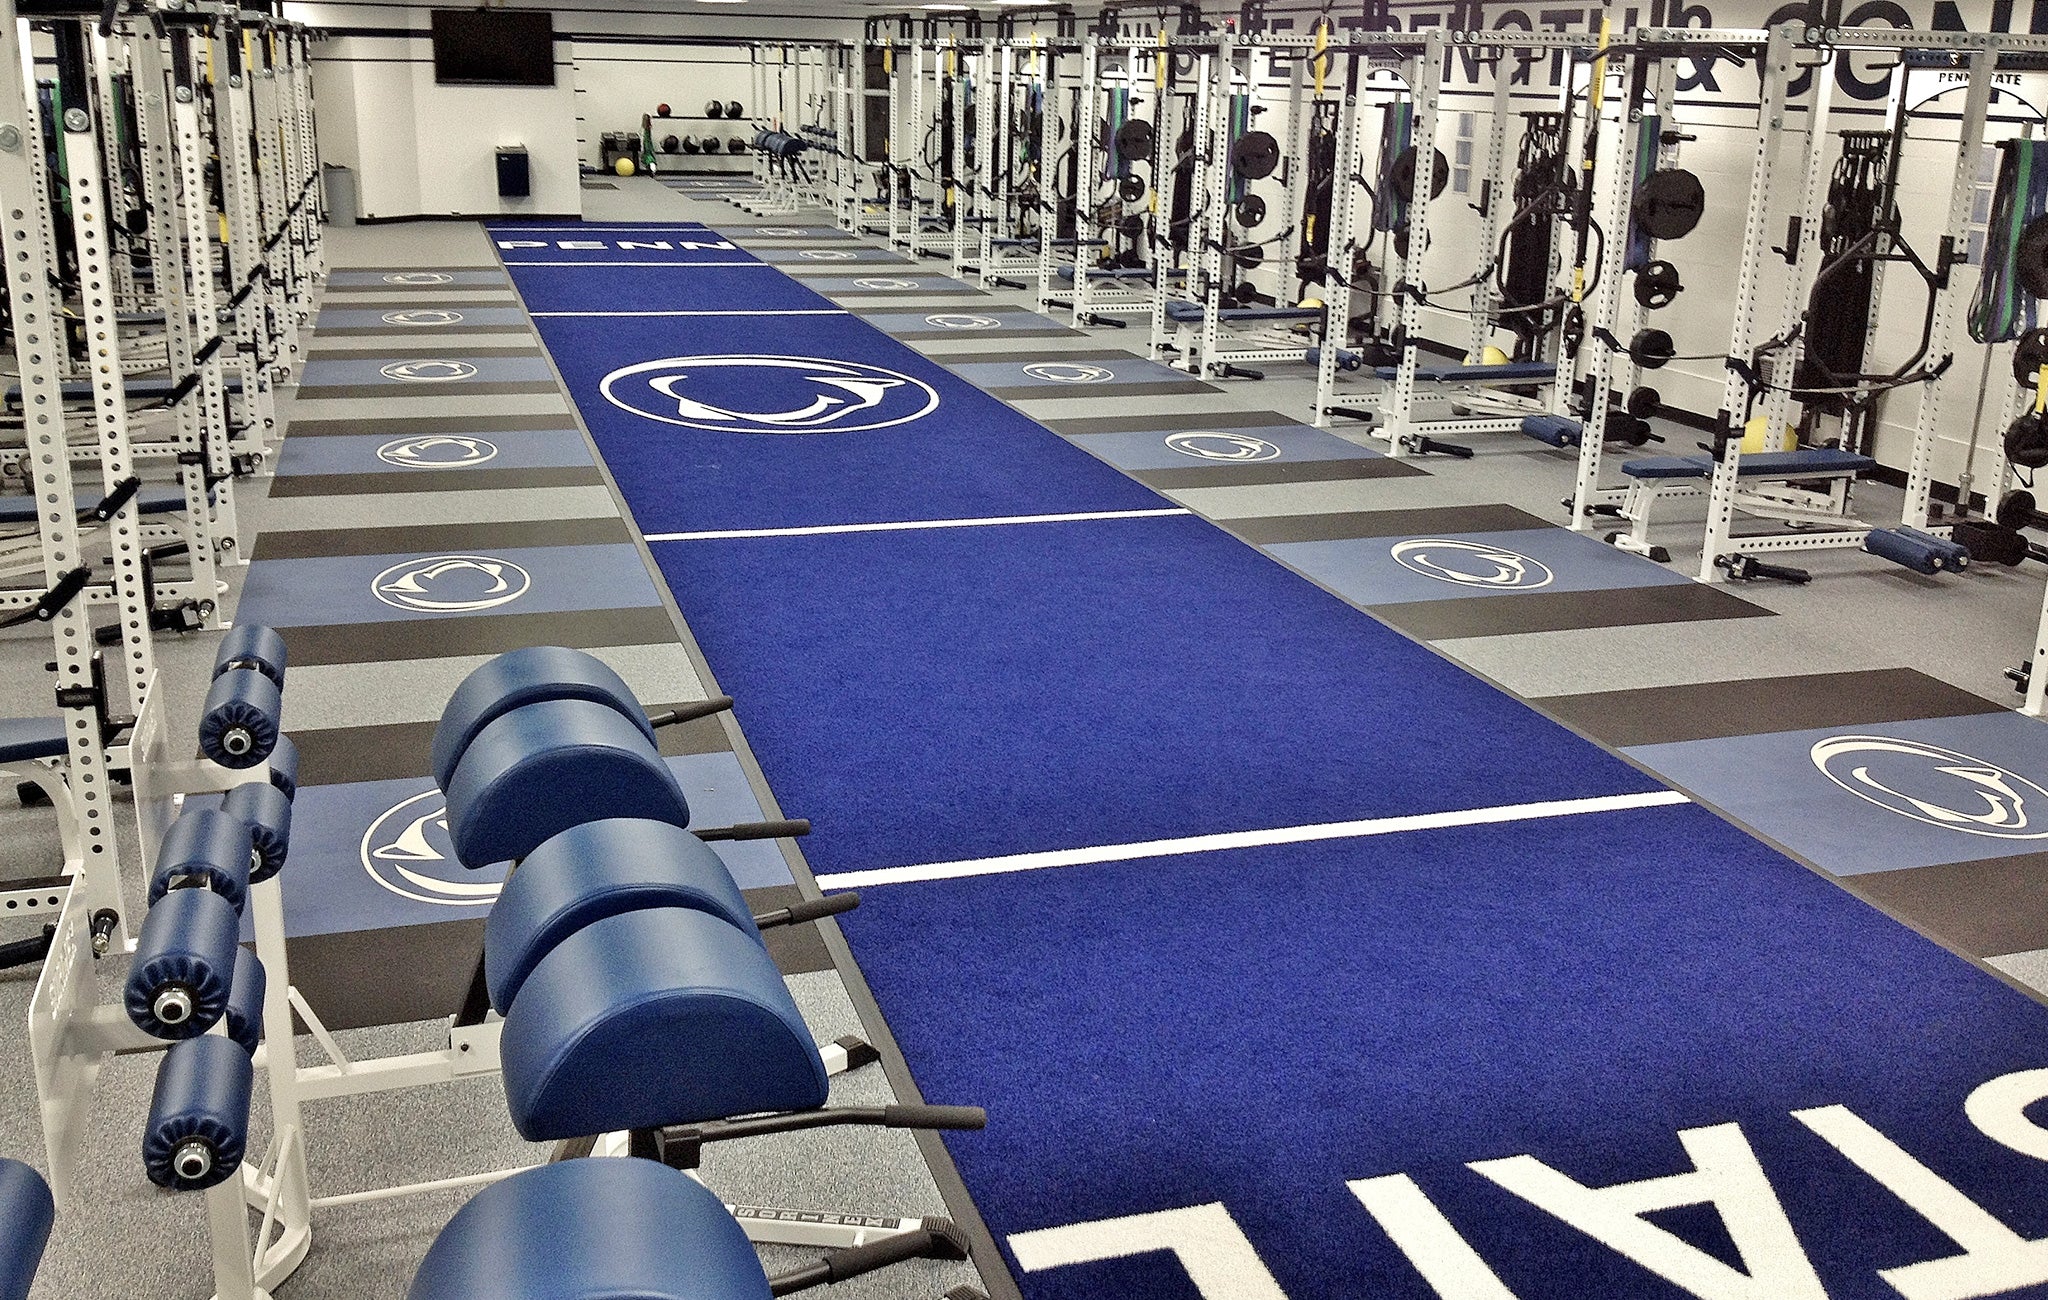 Penn state University multisport weight room